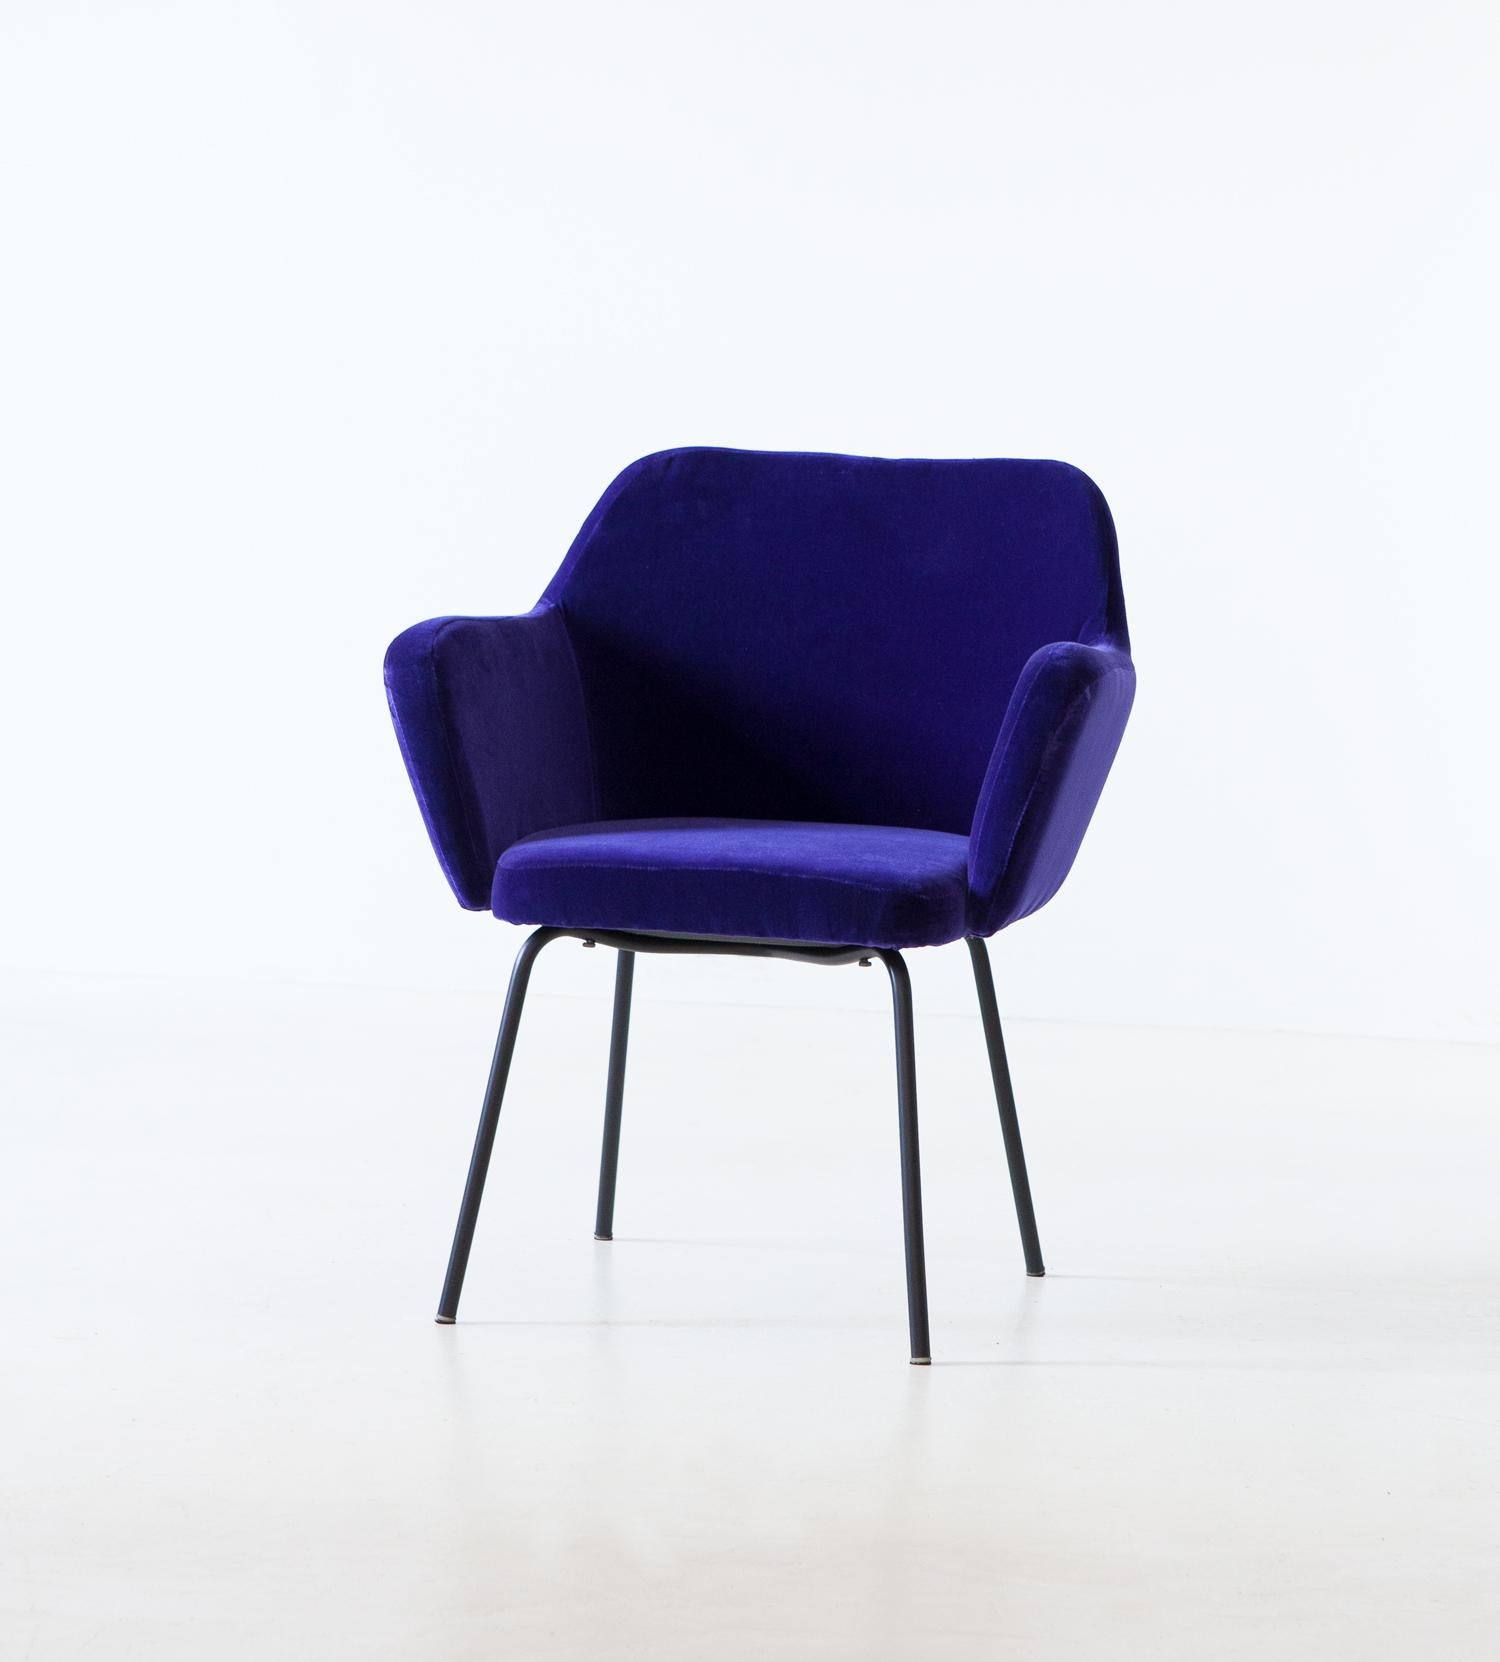 Mid-Century Modern 'Airone' Chair in Velvet by Studio PFR for Arflex, 1955